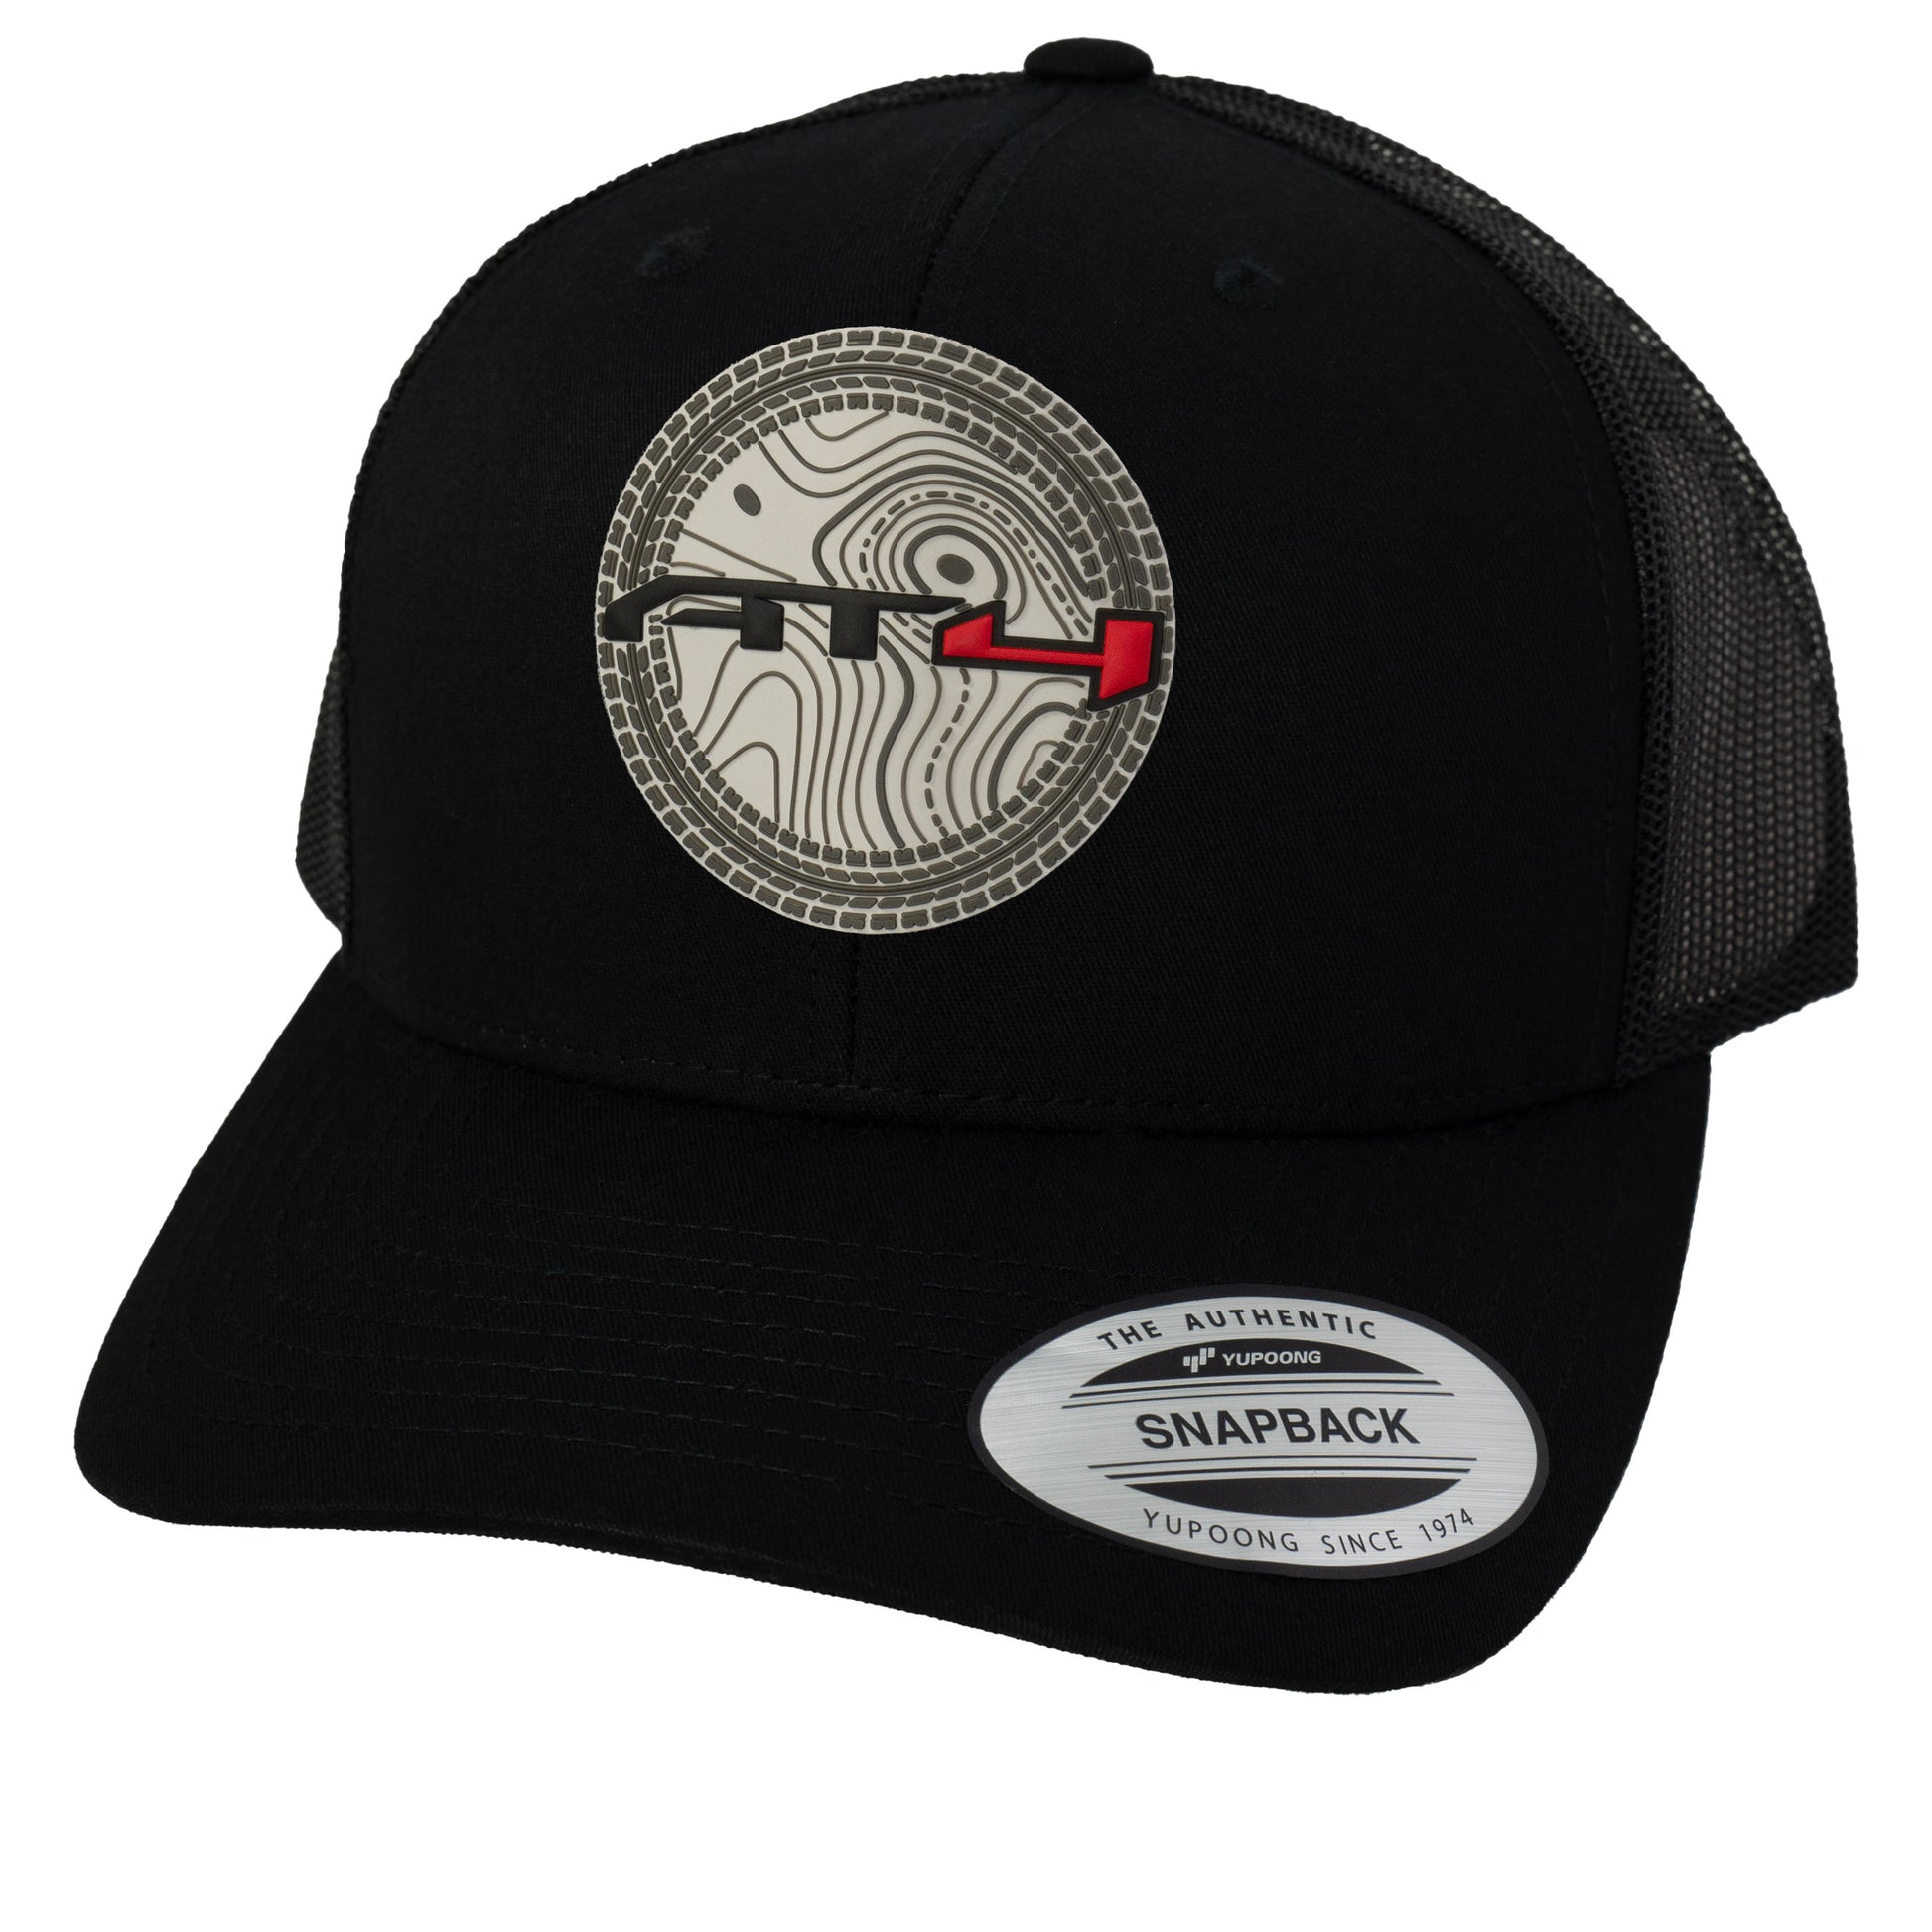 AT4 3D Topo YP Snapback Trucker Hat- Black - Ten Gallon Hat Co.